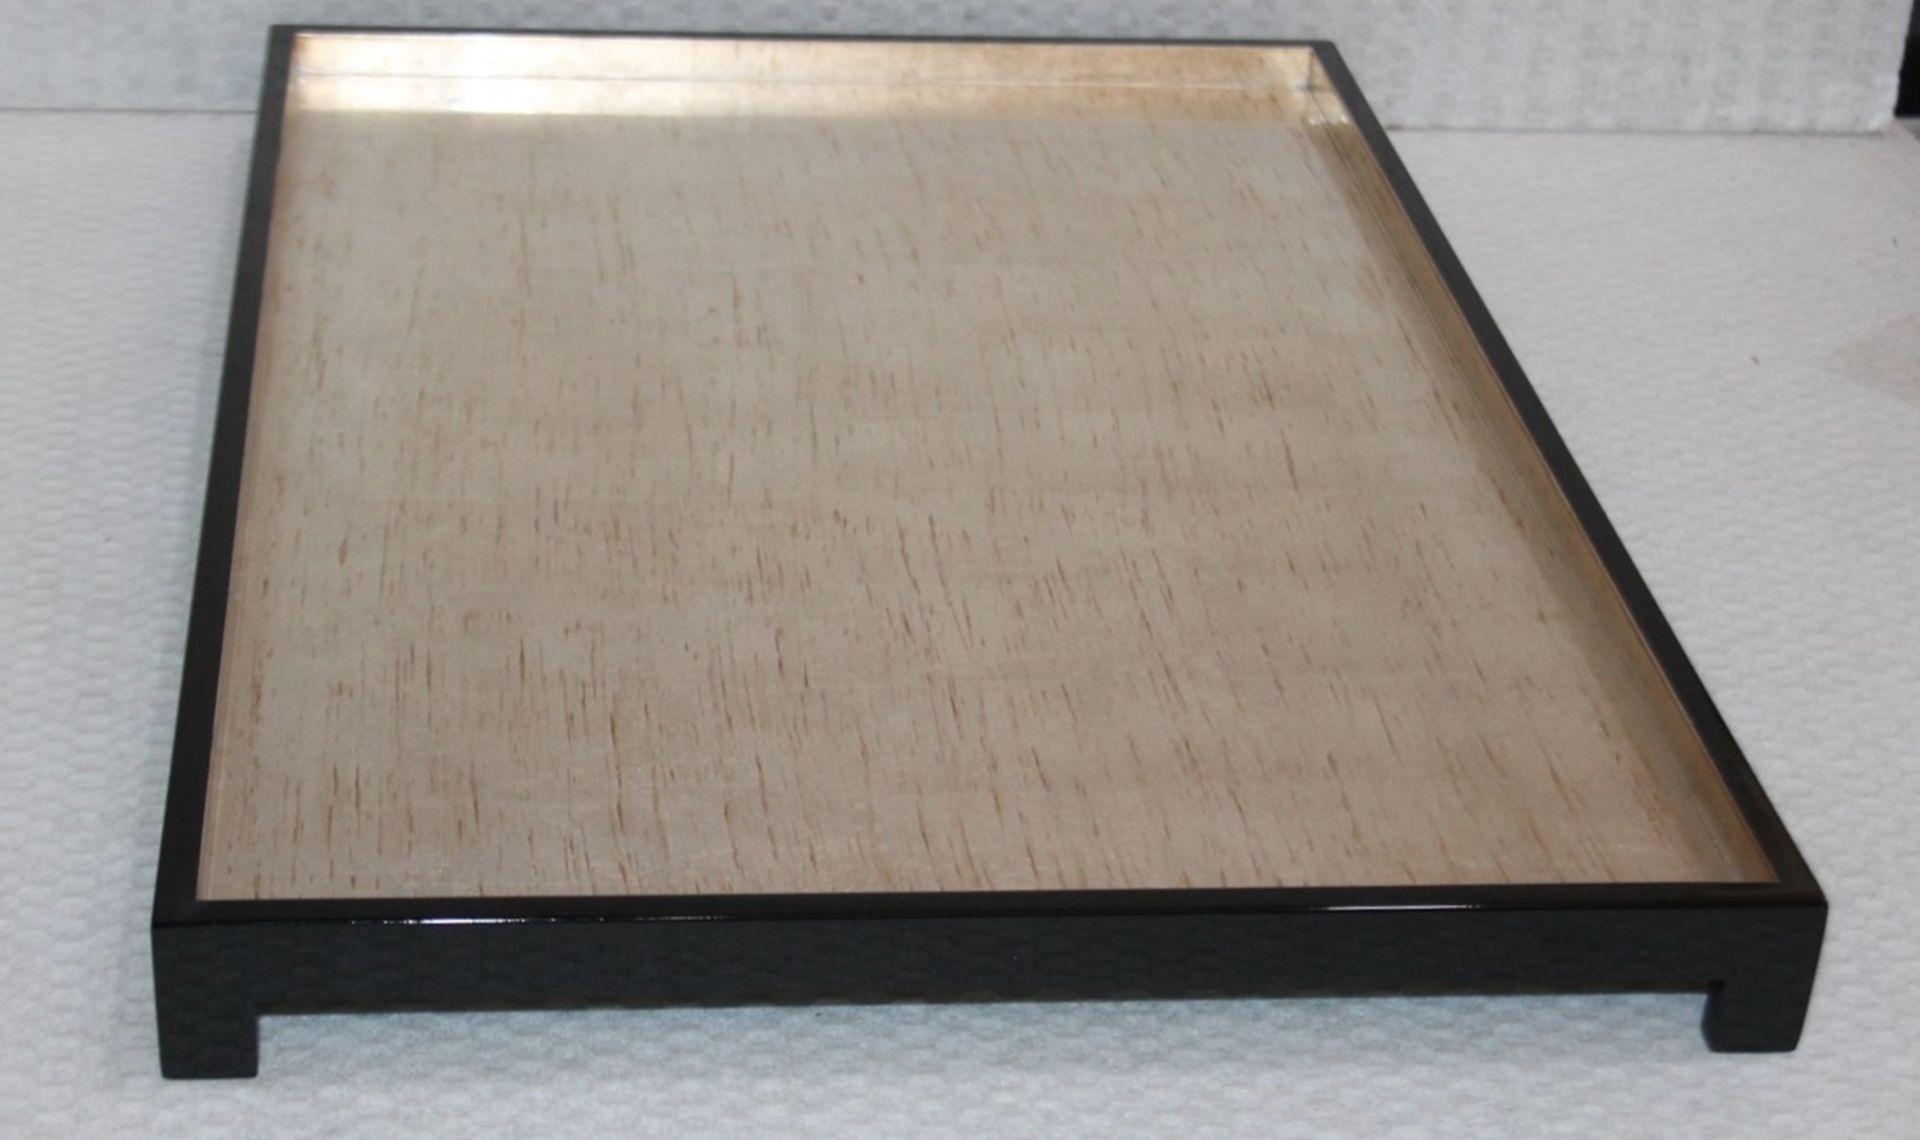 1 x POSH TRADING COMPANY Large Silver Leaf Windsor Tray (52cm x 36cm) - Original Price £160.00 - Image 6 of 9